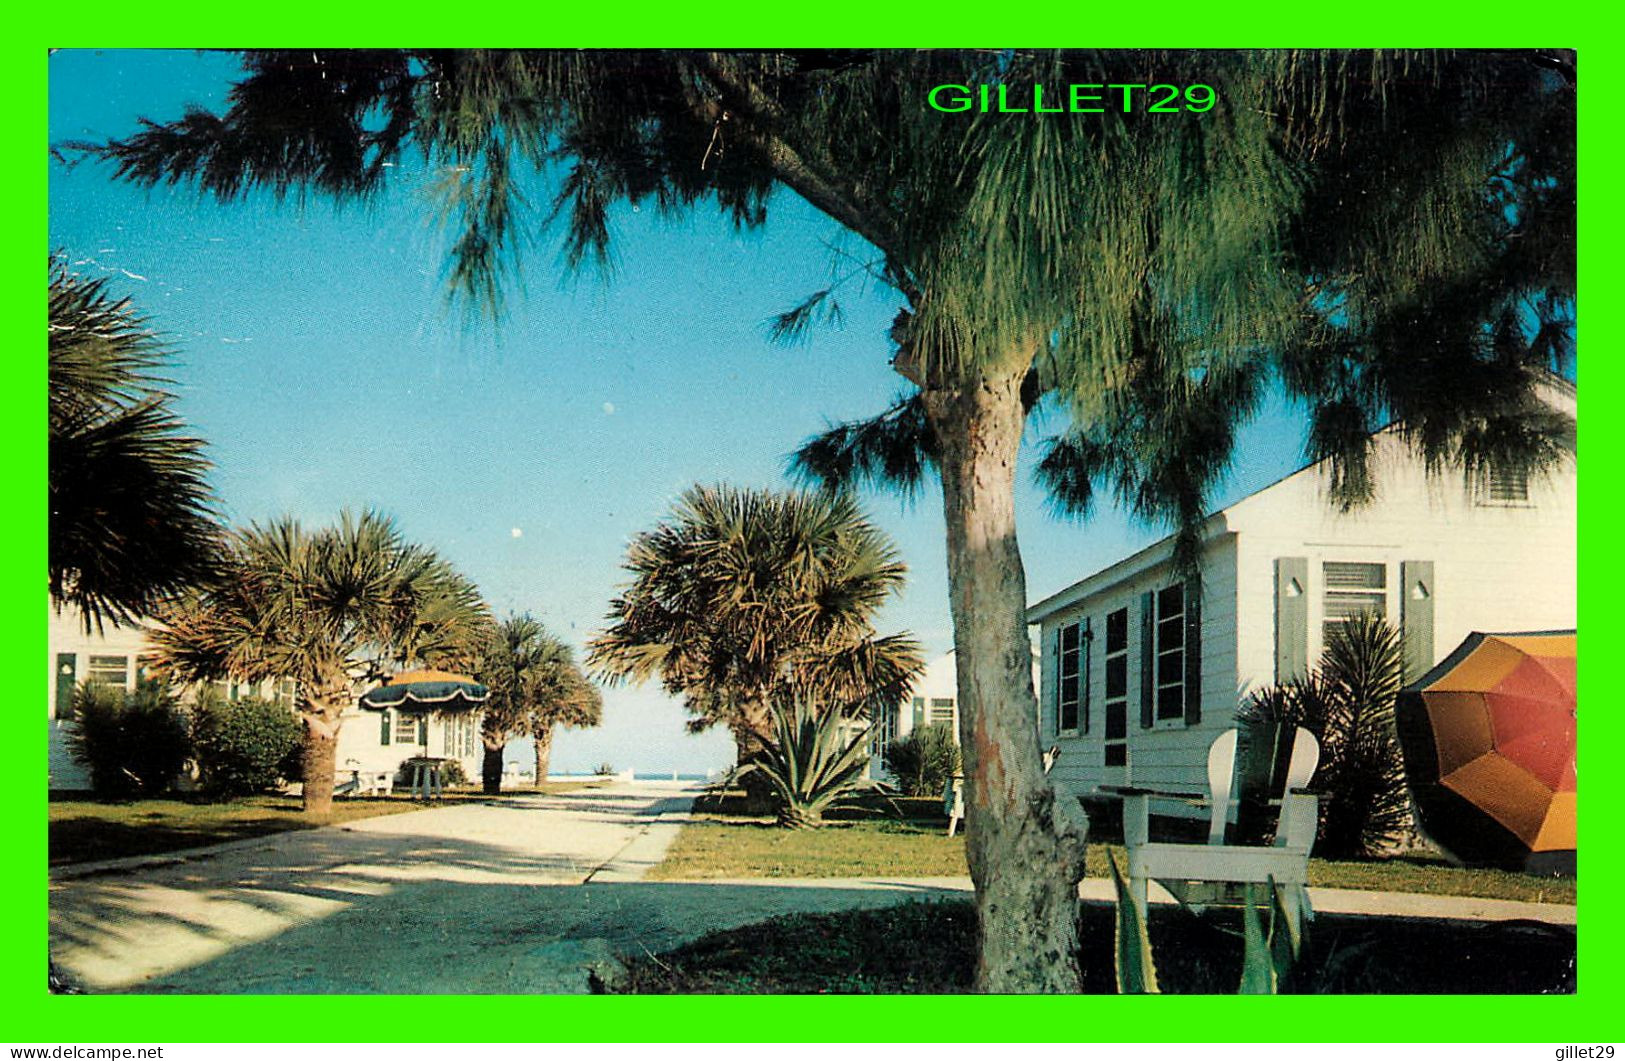 DAYTONA BEACH, FL - SAN SALVADOR COTTAGES - TRAVEL IN 1983 - PUB. BY C.K J. O'BRIEN - - Daytona